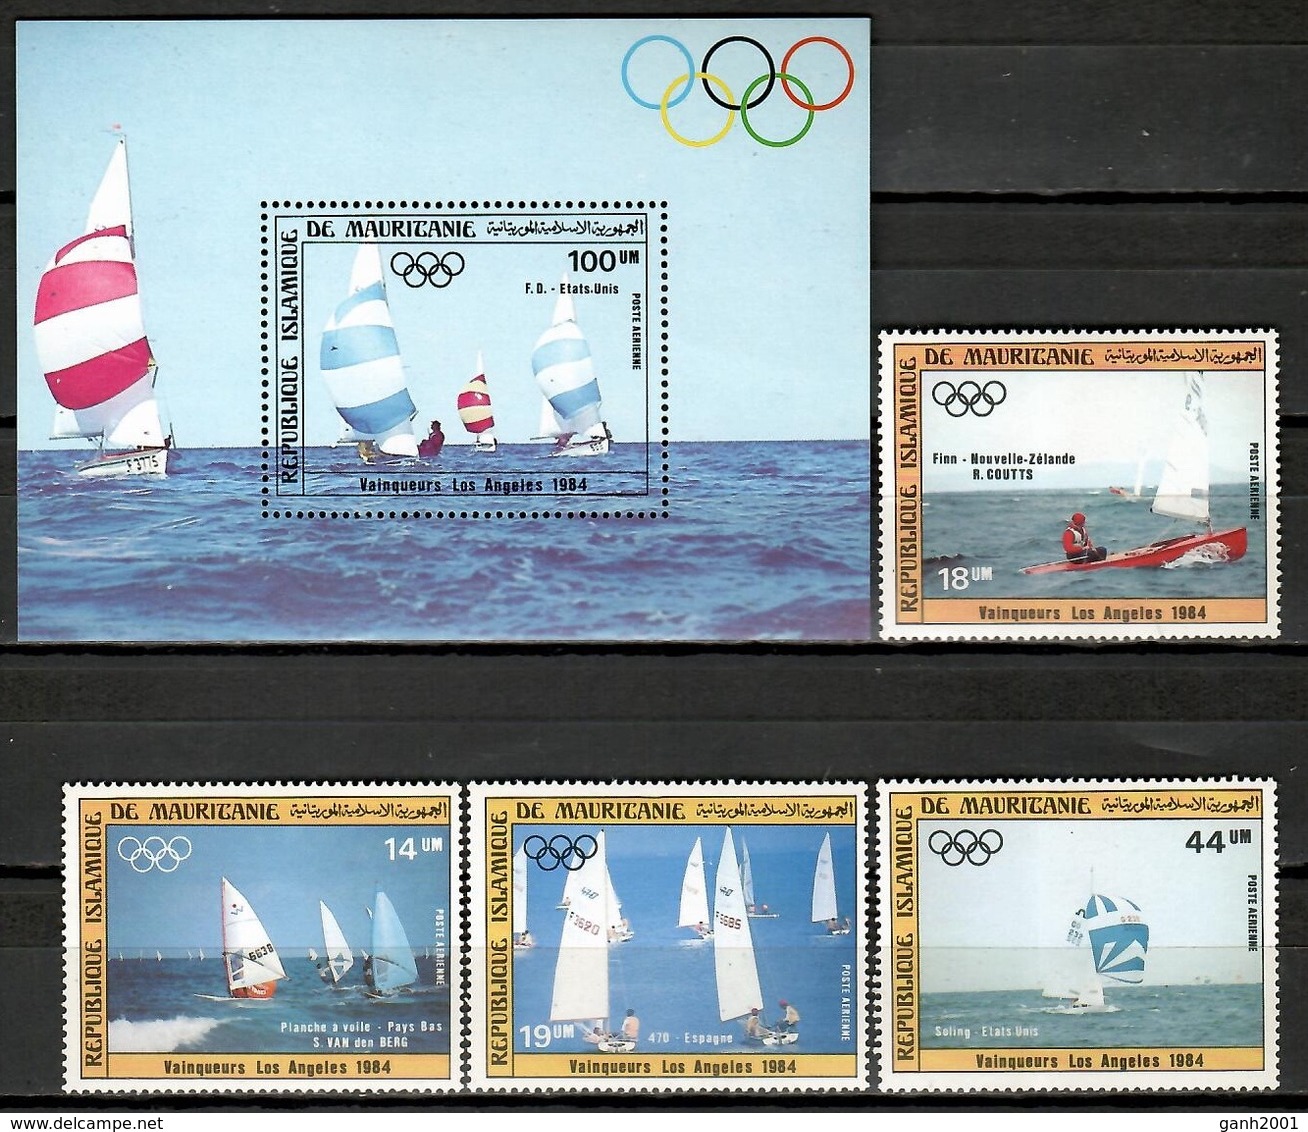 Mauritania 1984 / Olympic Games Los Angeles Sailing MNH Juegos Olímpicos Vela Olympische Spiele / Cu10713  4 - Verano 1984: Los Angeles